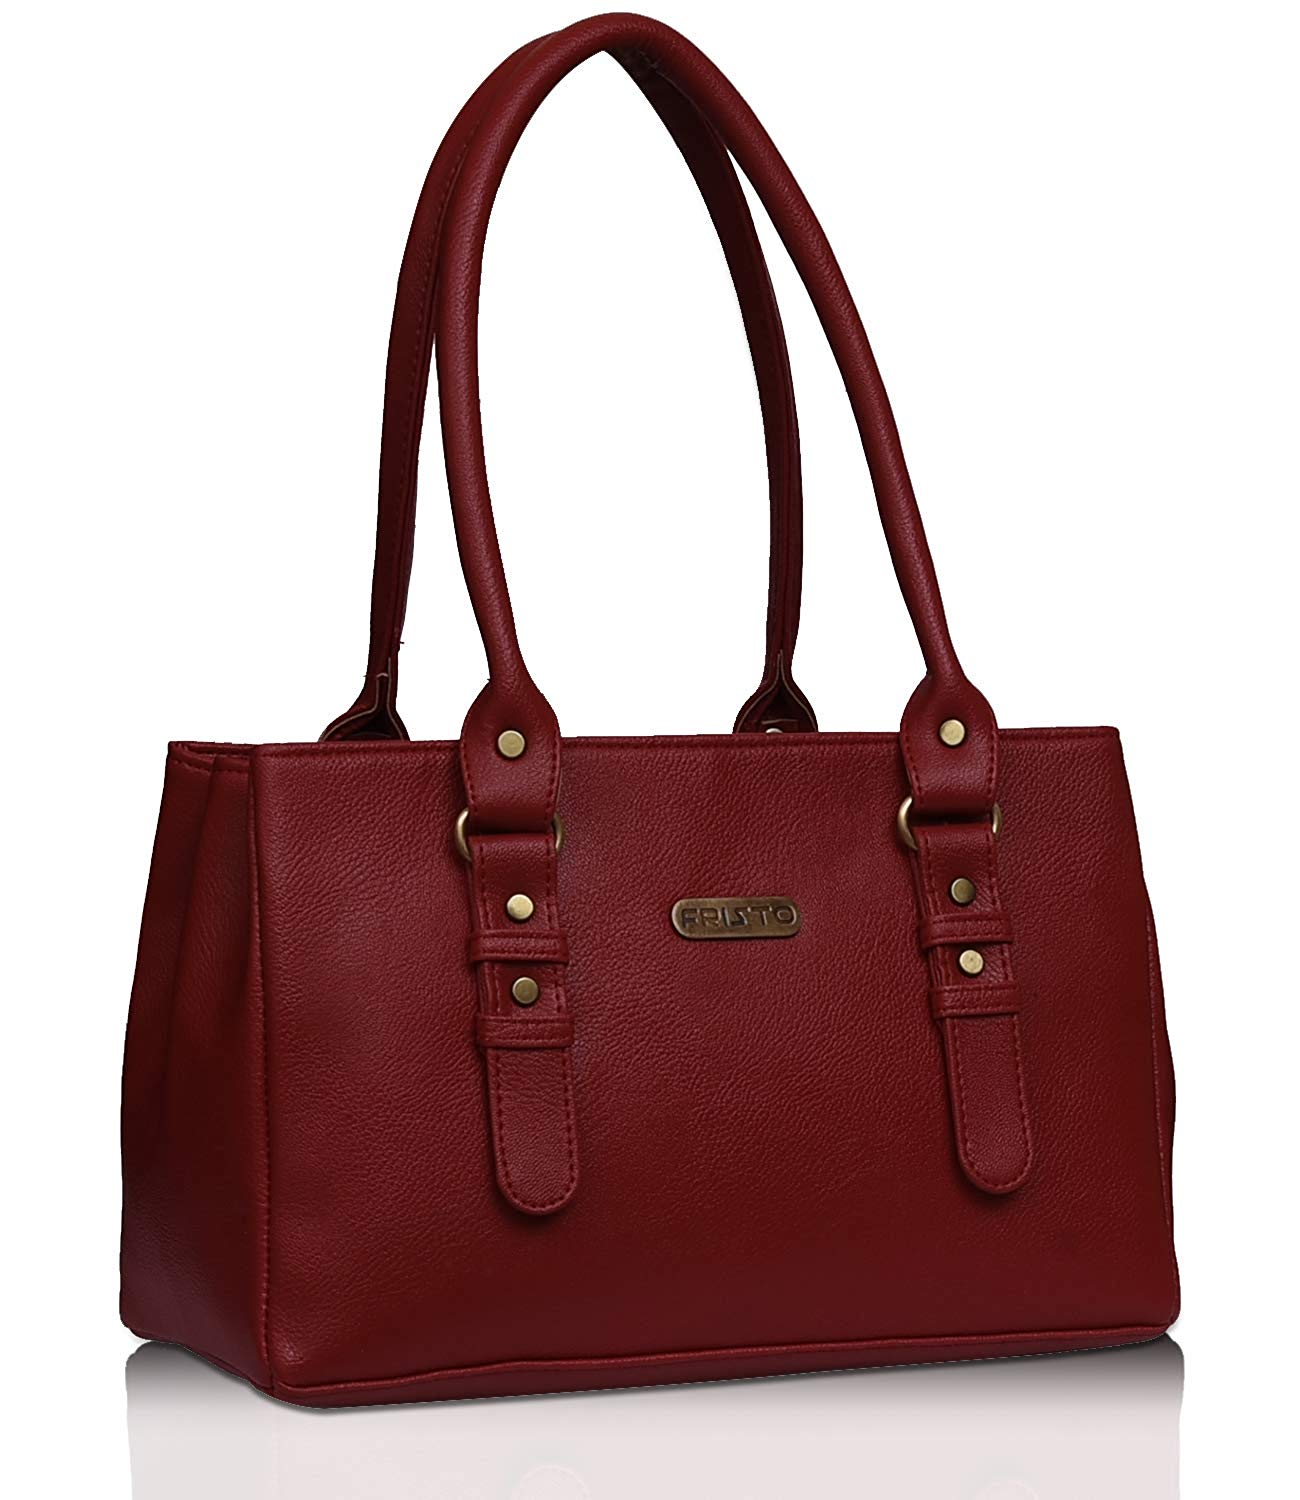 Fristo Red Women Handbag Price in India